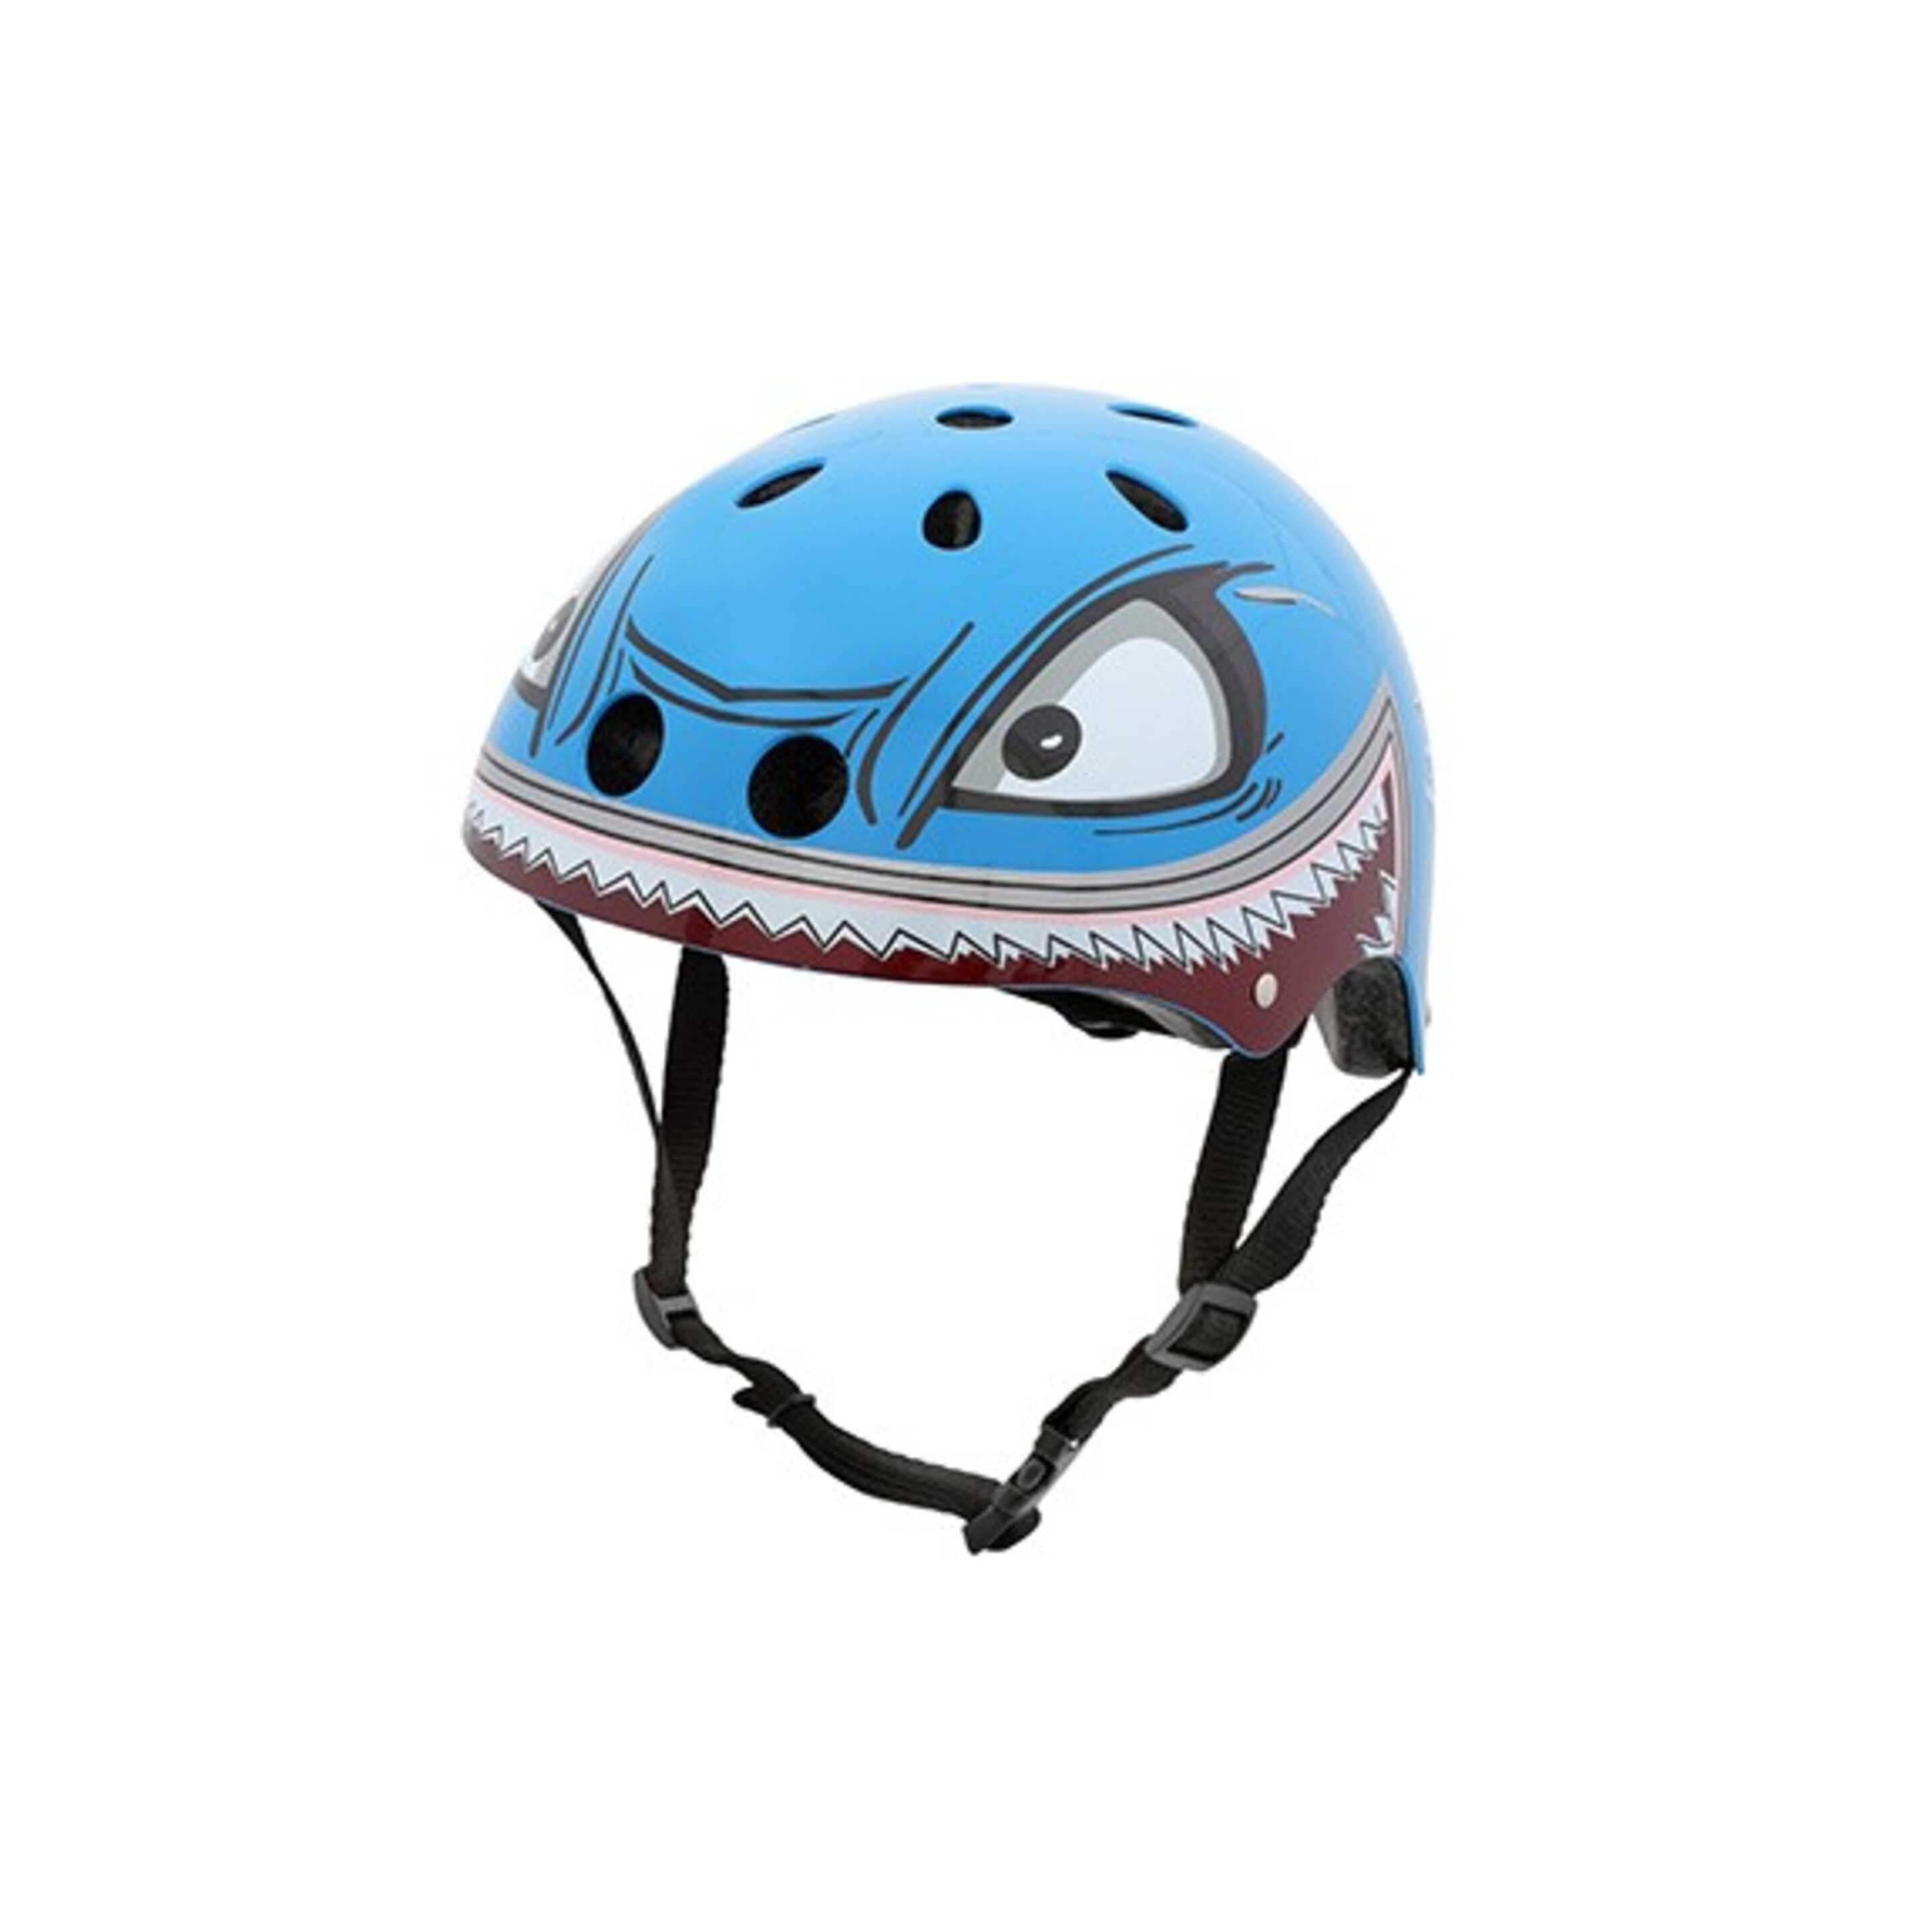 Mini Capacete De Bicicleta Hornit Lids Hammerhead - Azul - O capacete mais fixe do mundo! | Sport Zone MKP